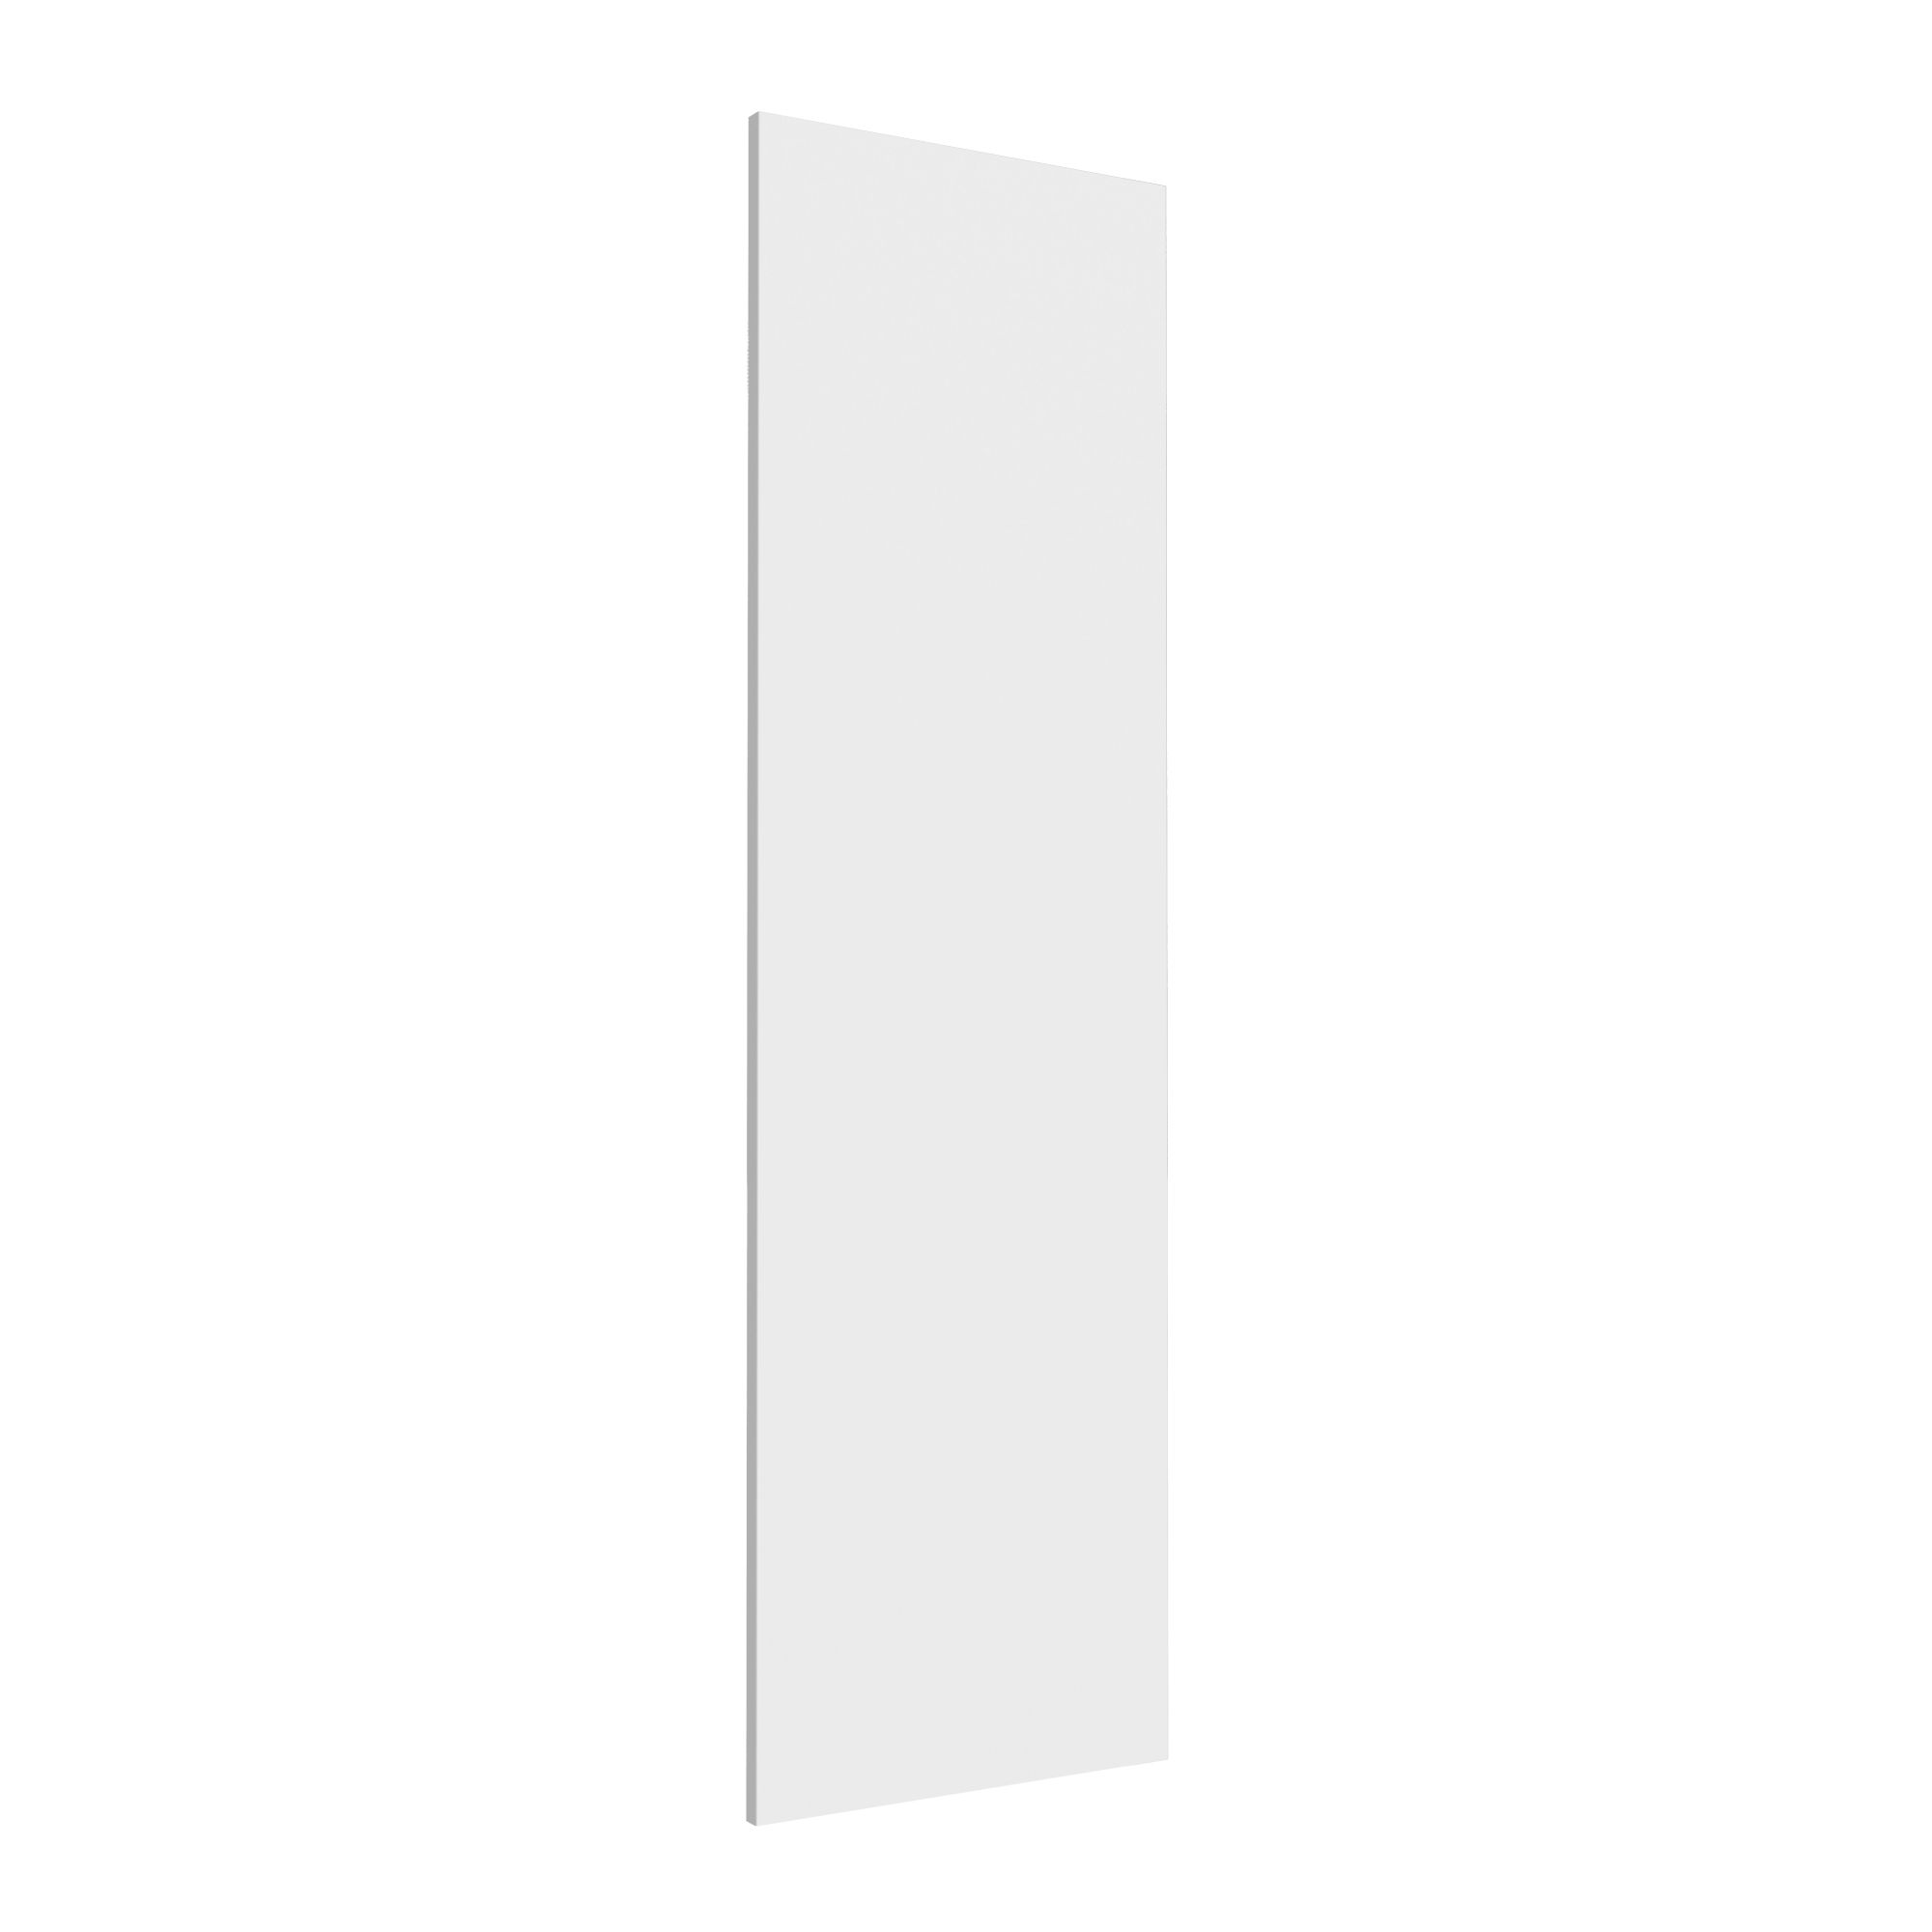 Form Darwin Modular Matt white Wardrobe door (H)1456mm (W)372mm